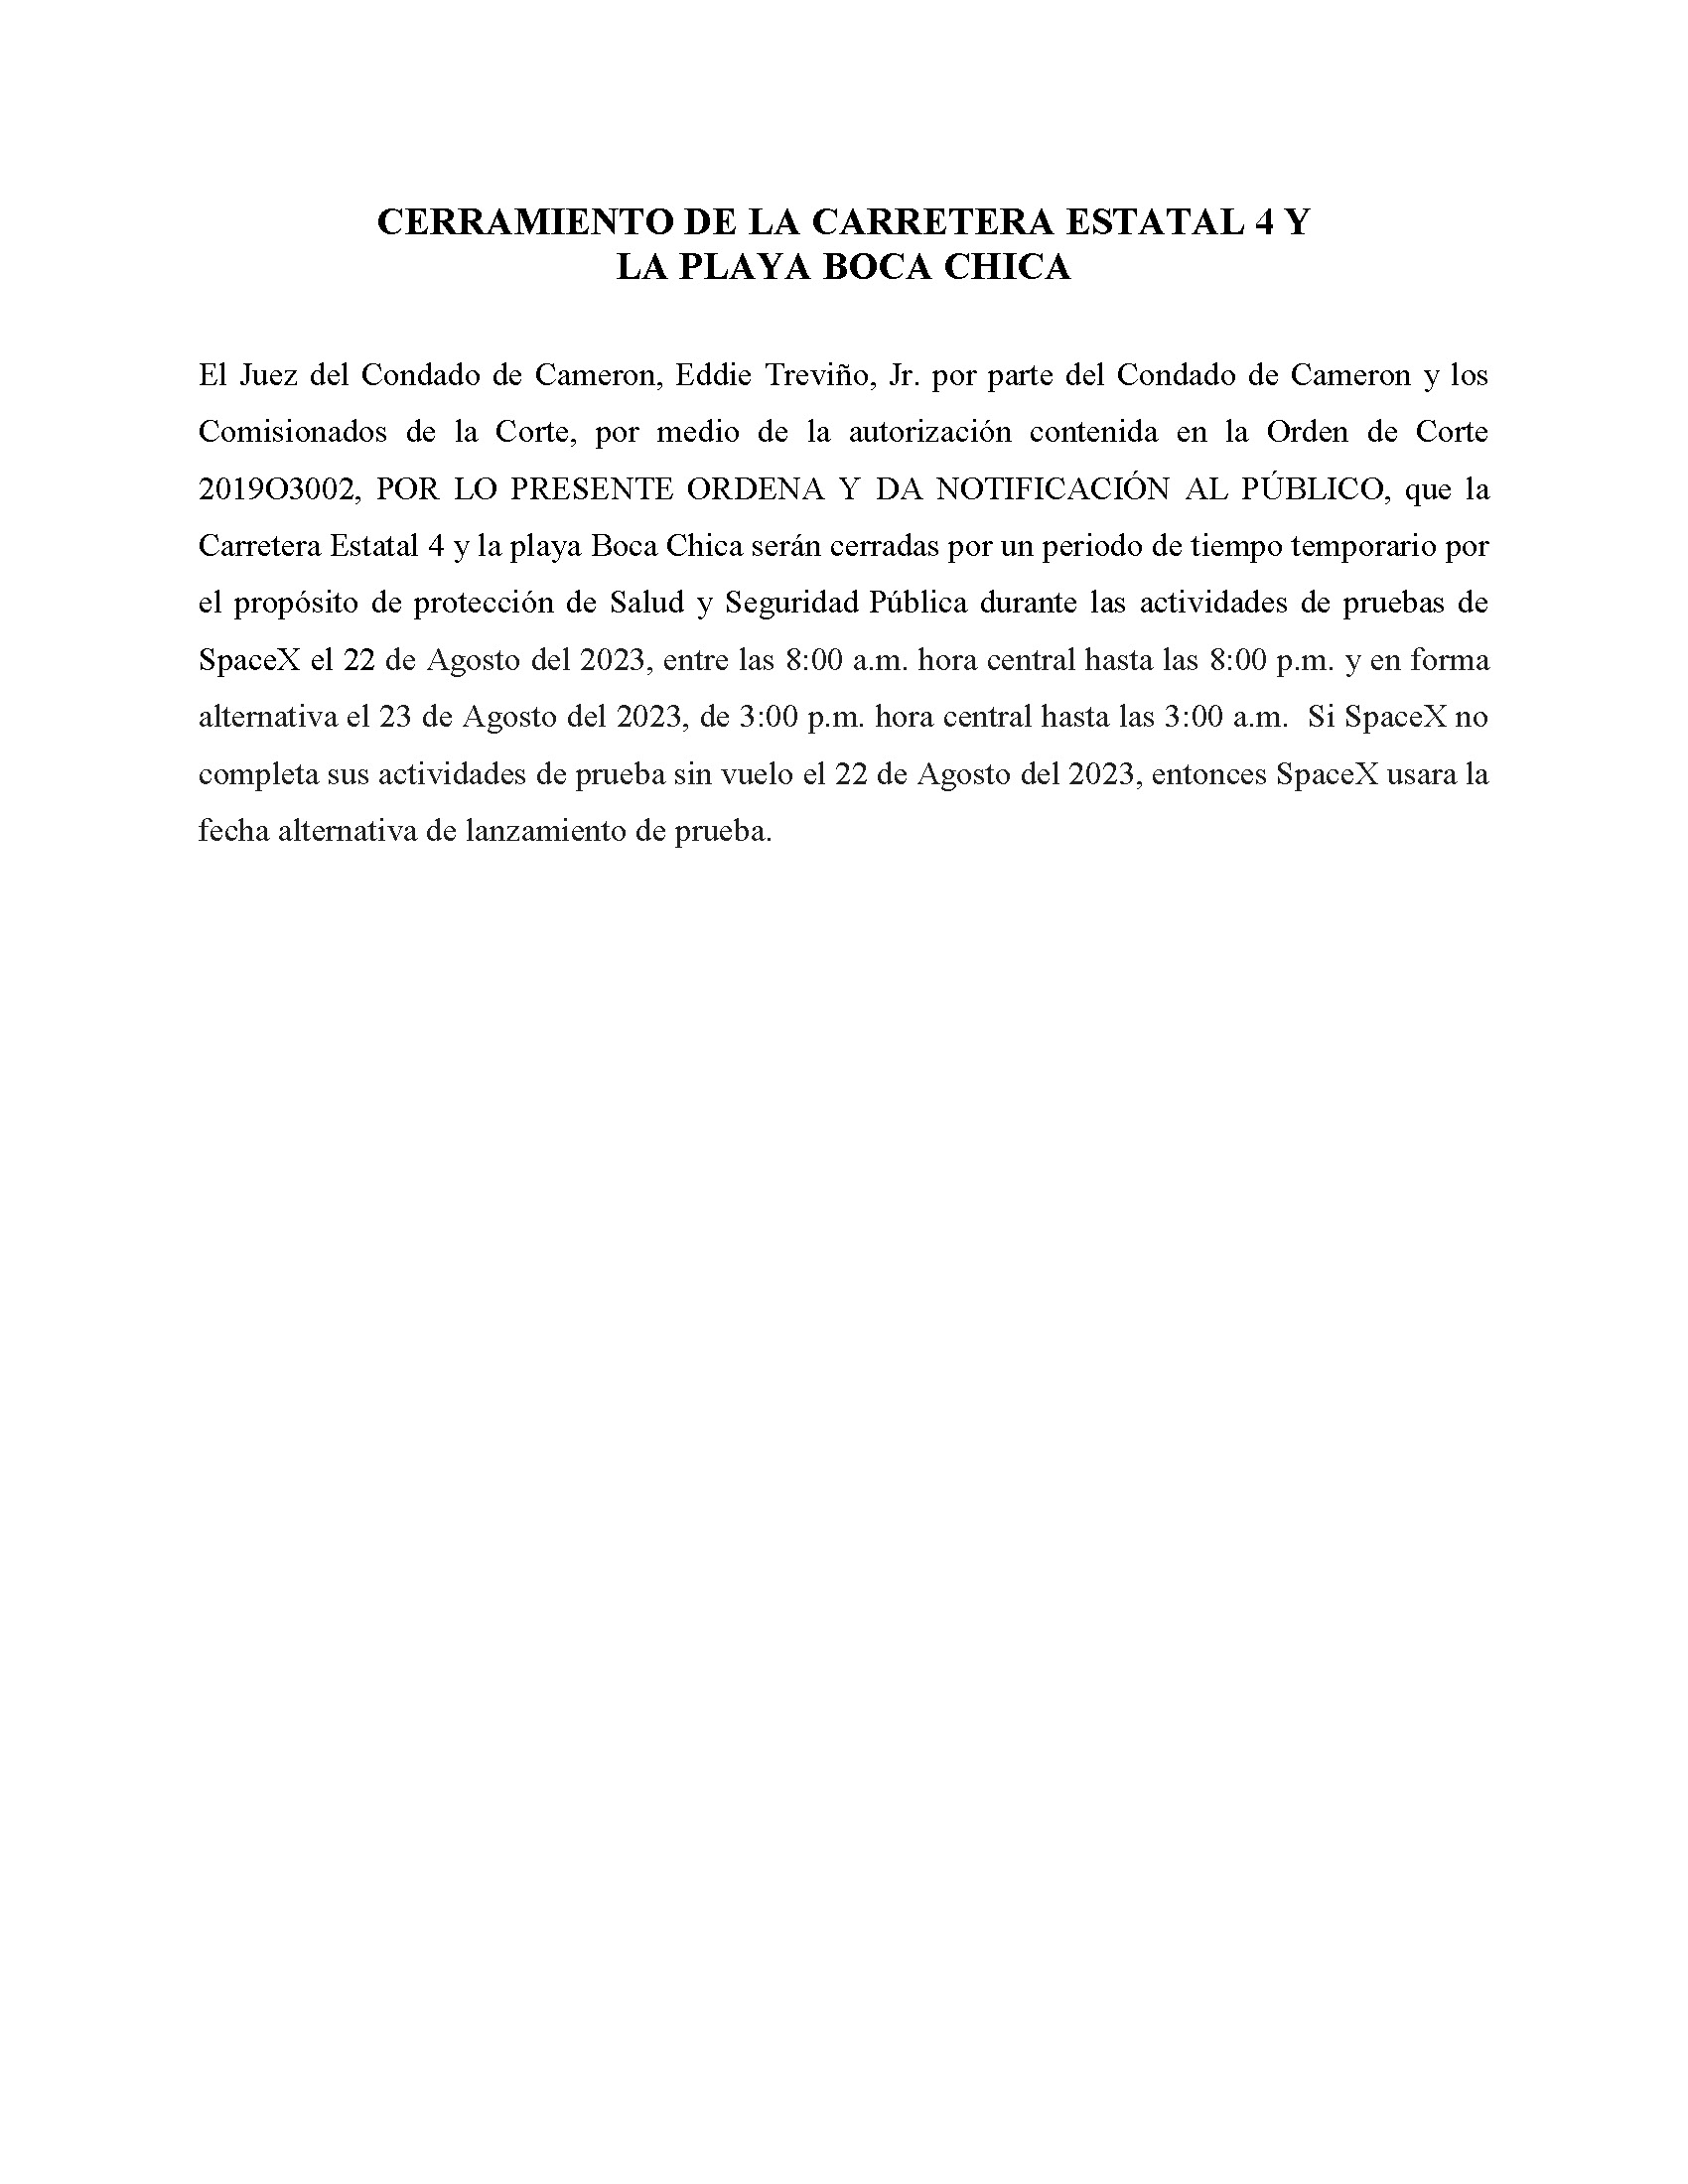 ORDER.CLOSURE OF HIGHWAY 4 Y LA PLAYA BOCA CHICA.SPANISH.08.22.23